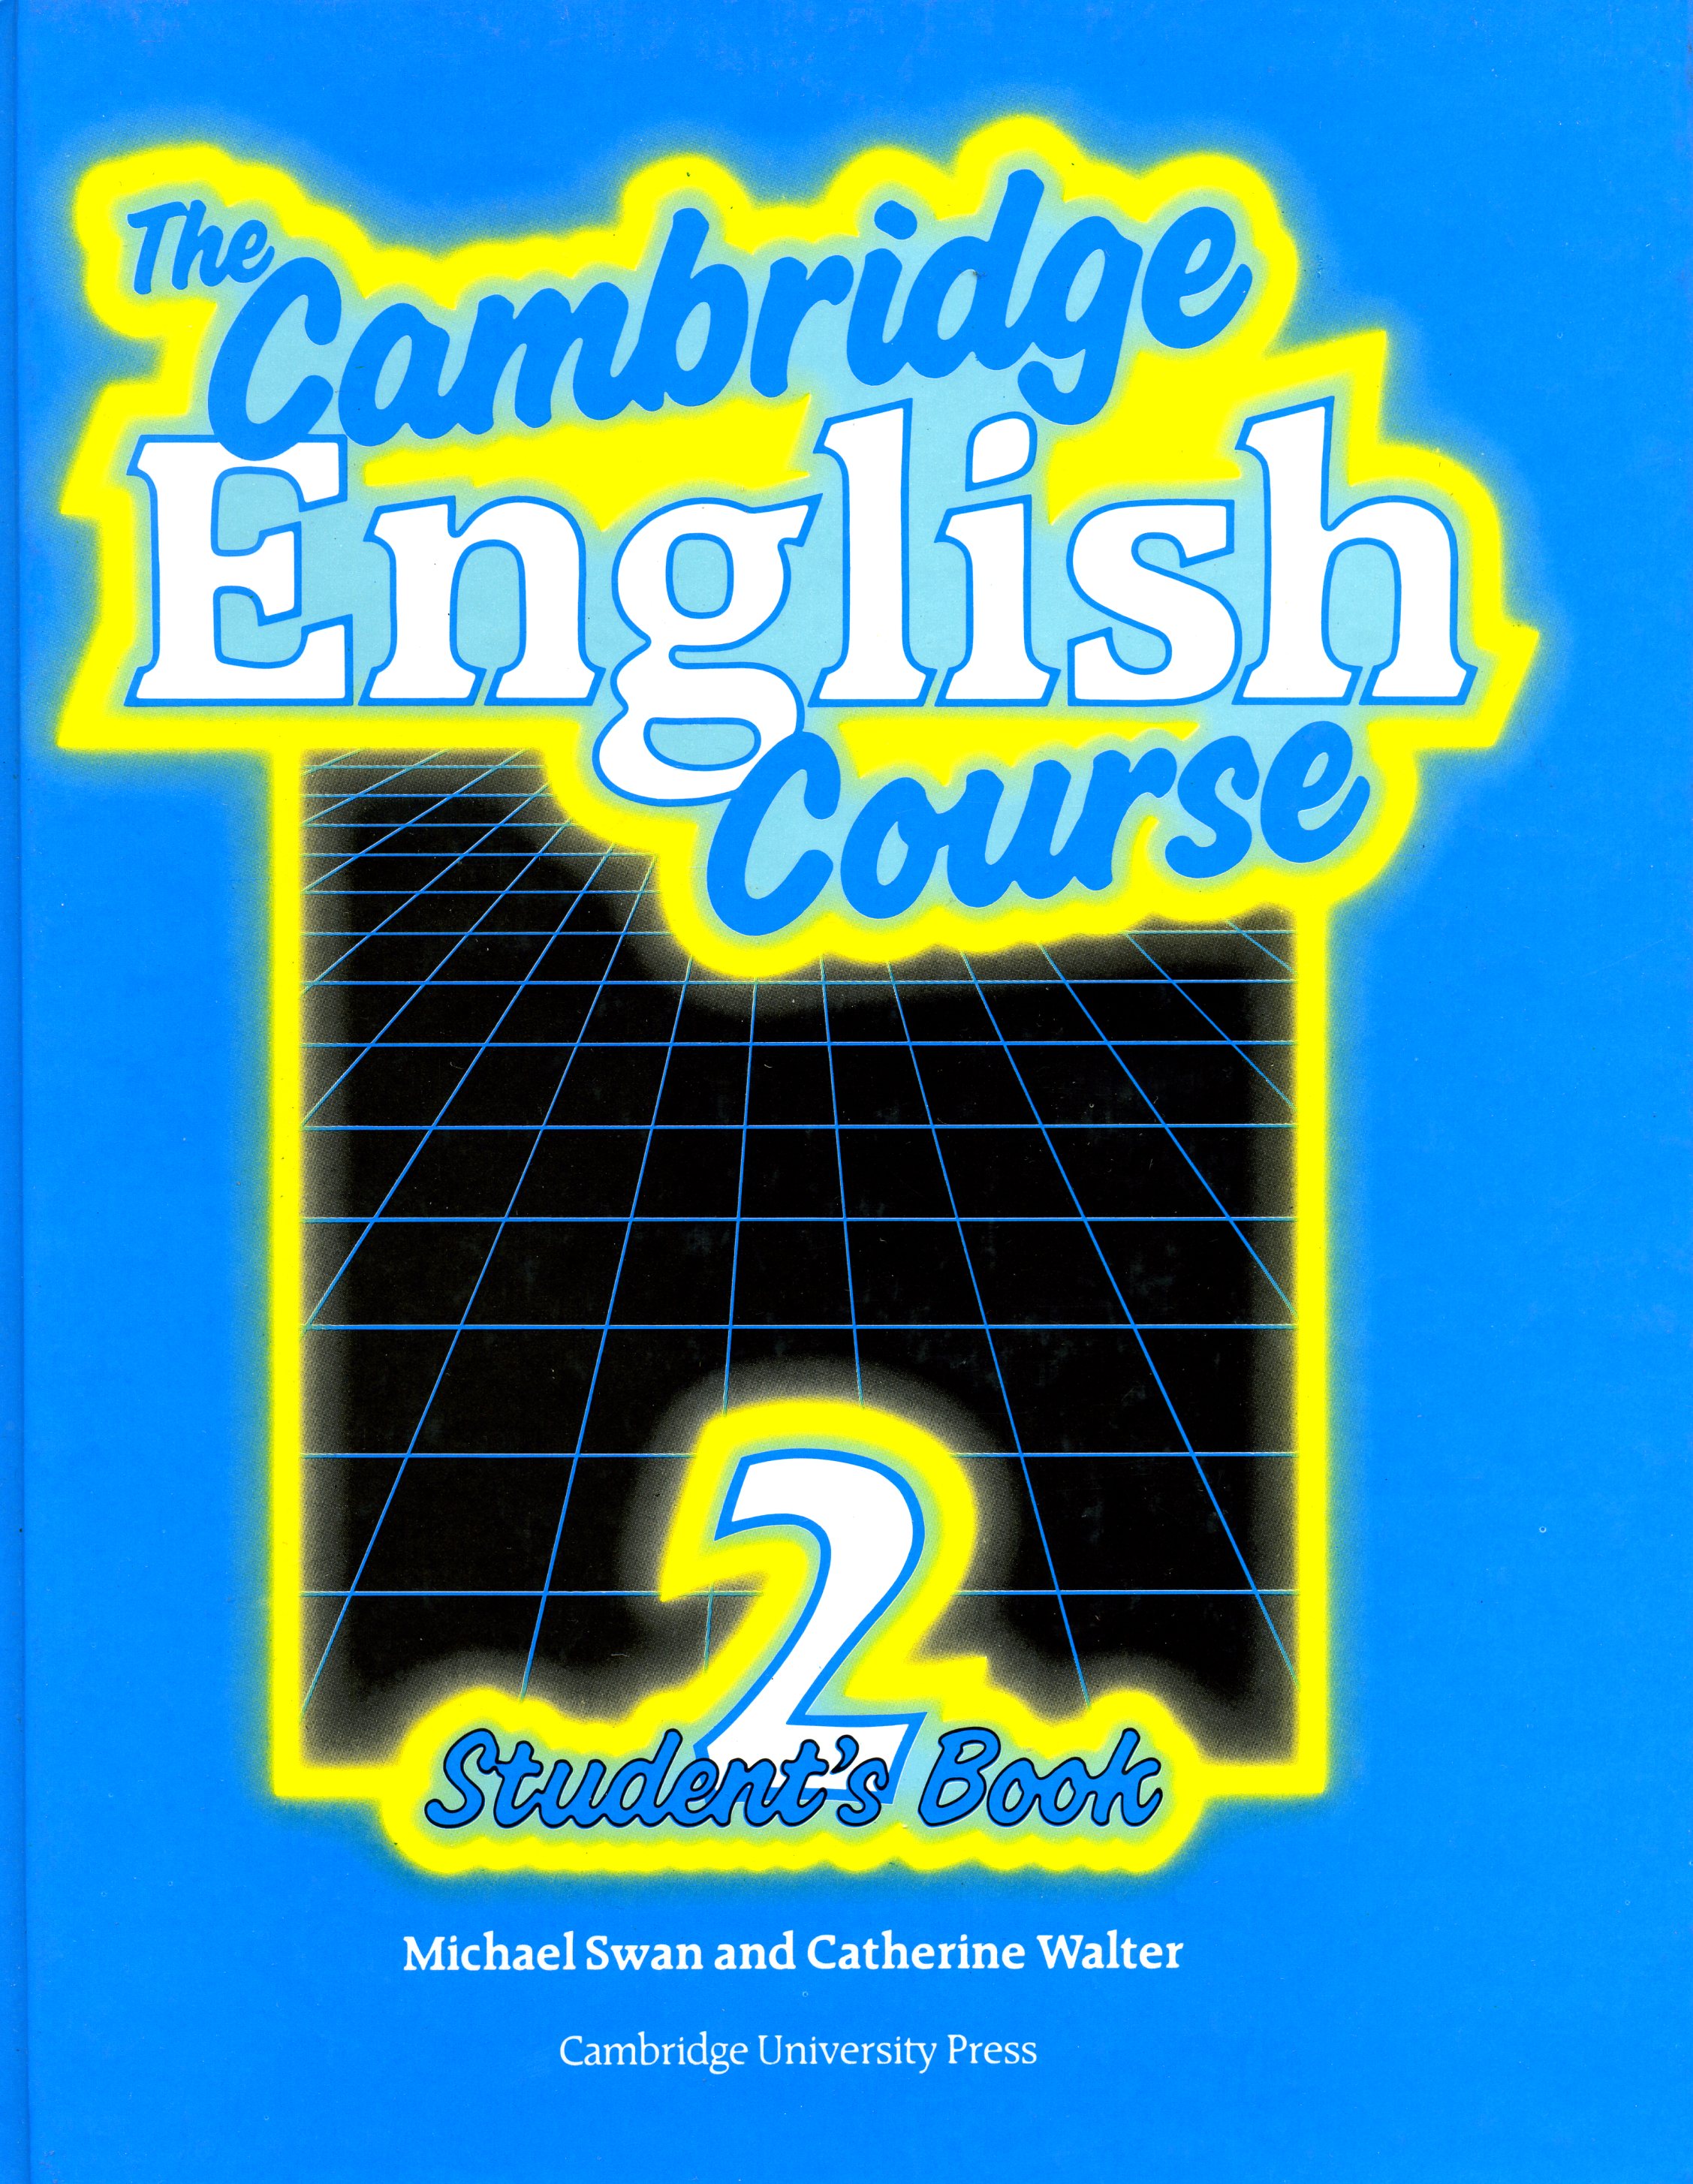 The Cambridge English course - 2 Student's Book